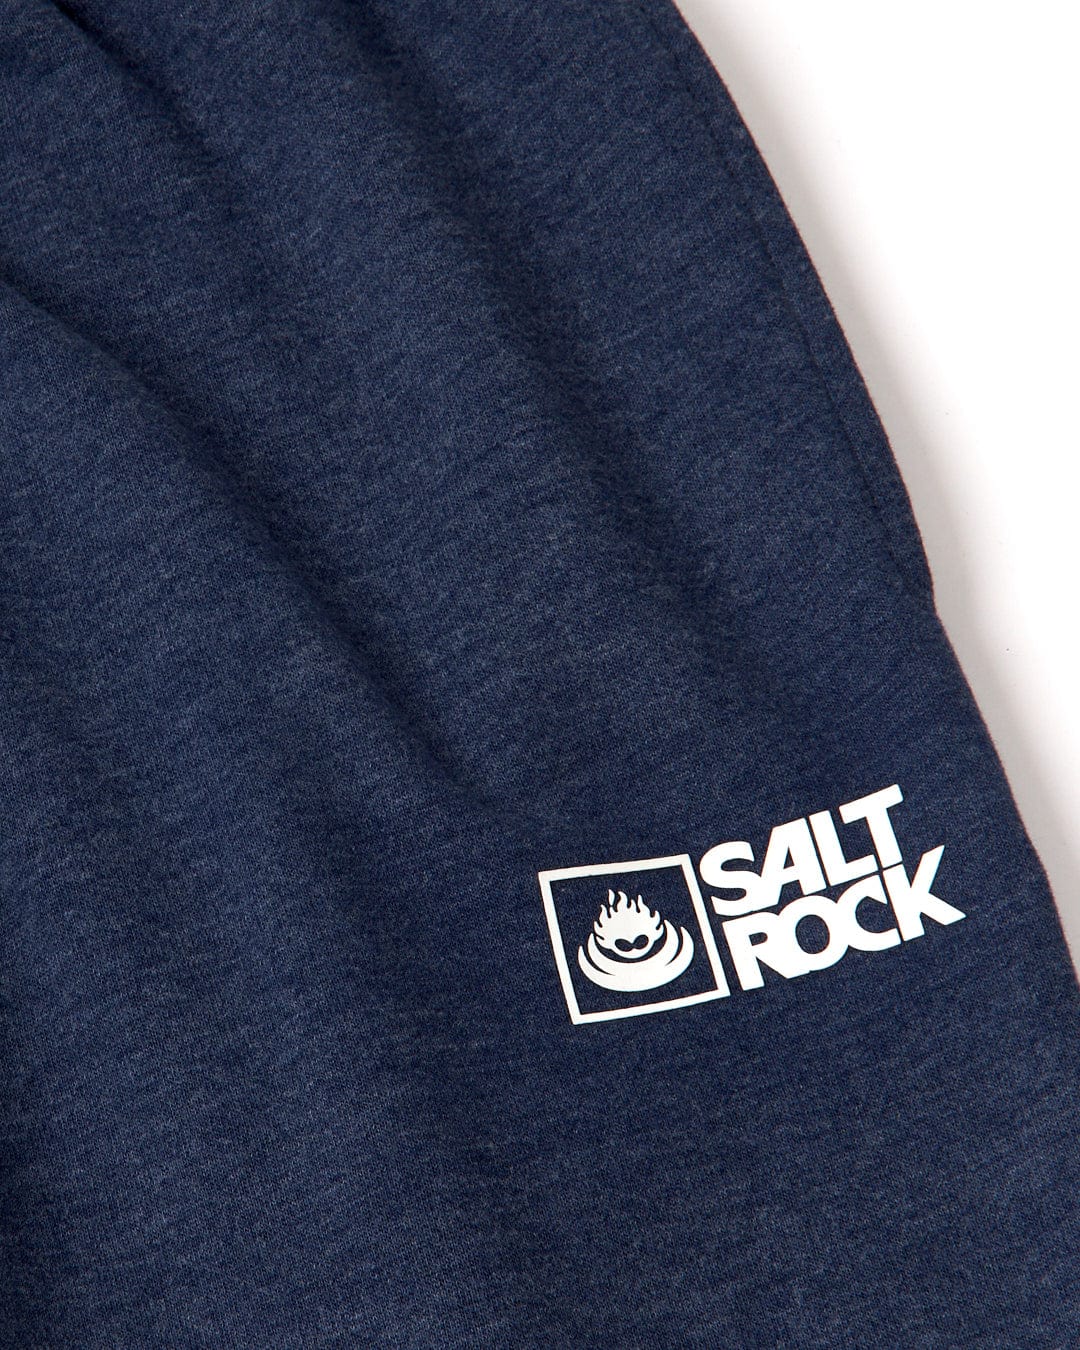 Close-up of a dark blue soft jersey material with the "Saltrock Original - Mens Joggers - Blue Marl" branding.